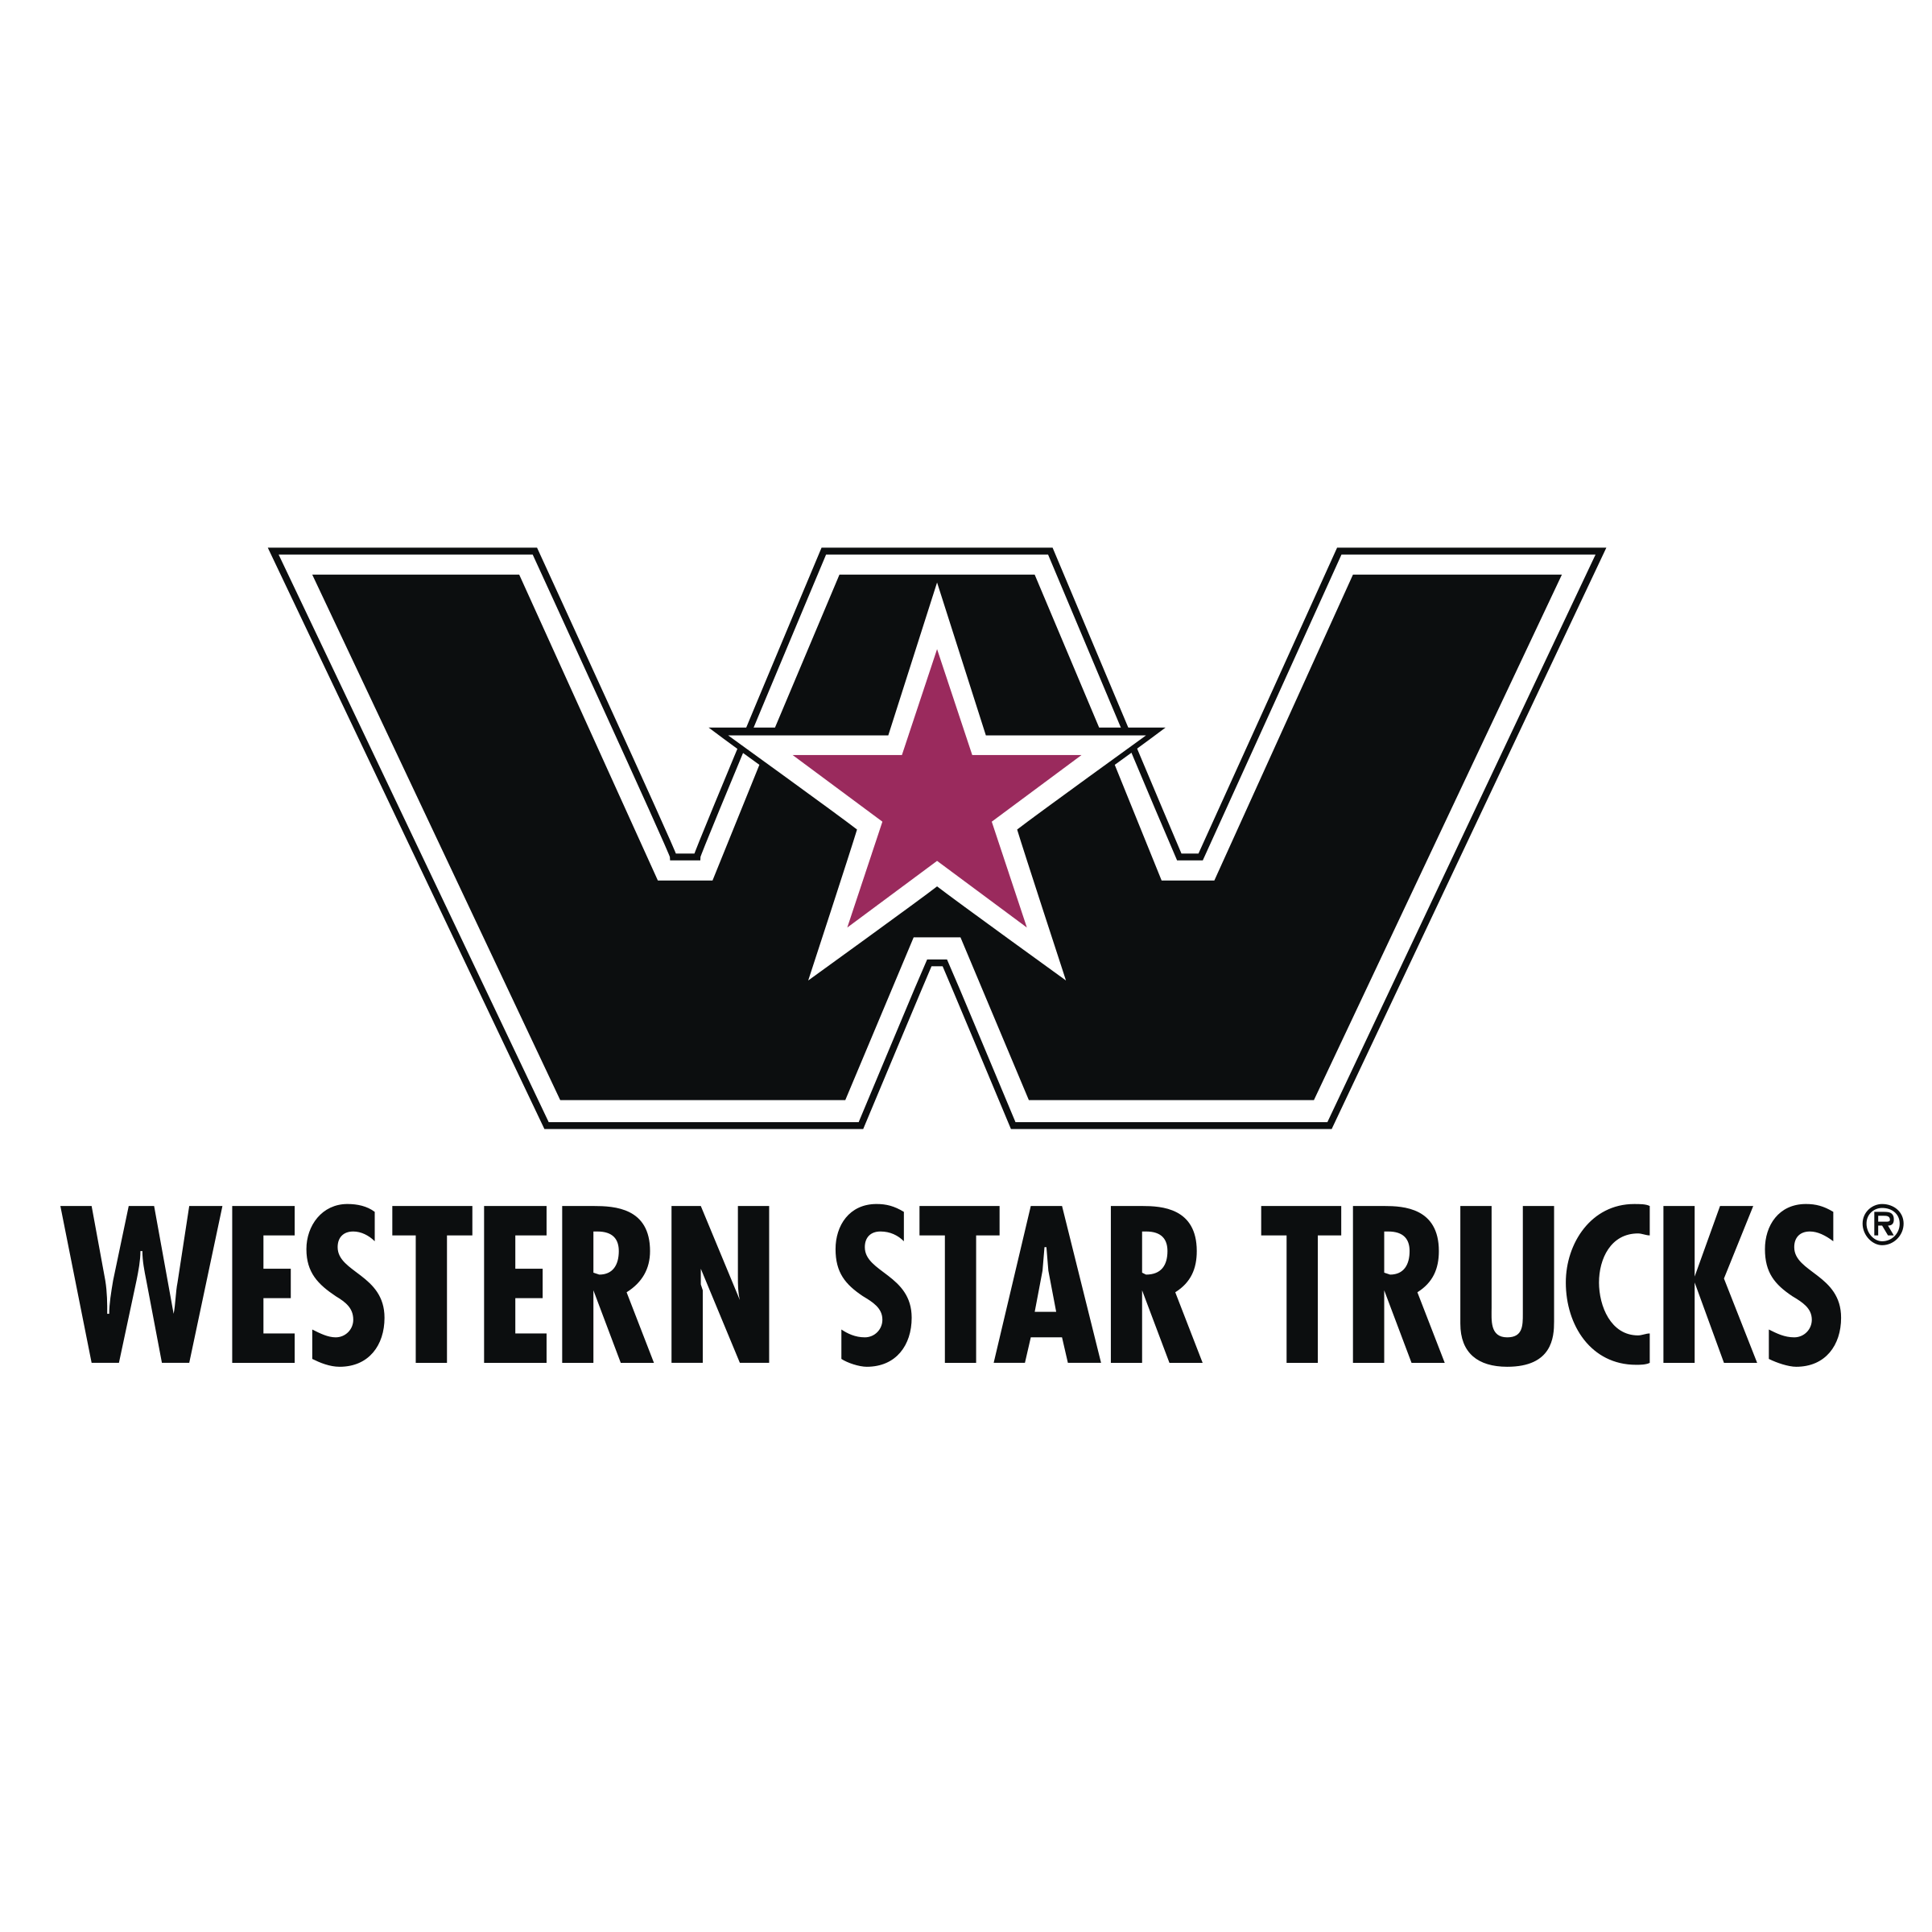 Black and White Western Star Logo - Western Star Trucks Logo PNG Transparent & SVG Vector - Freebie Supply